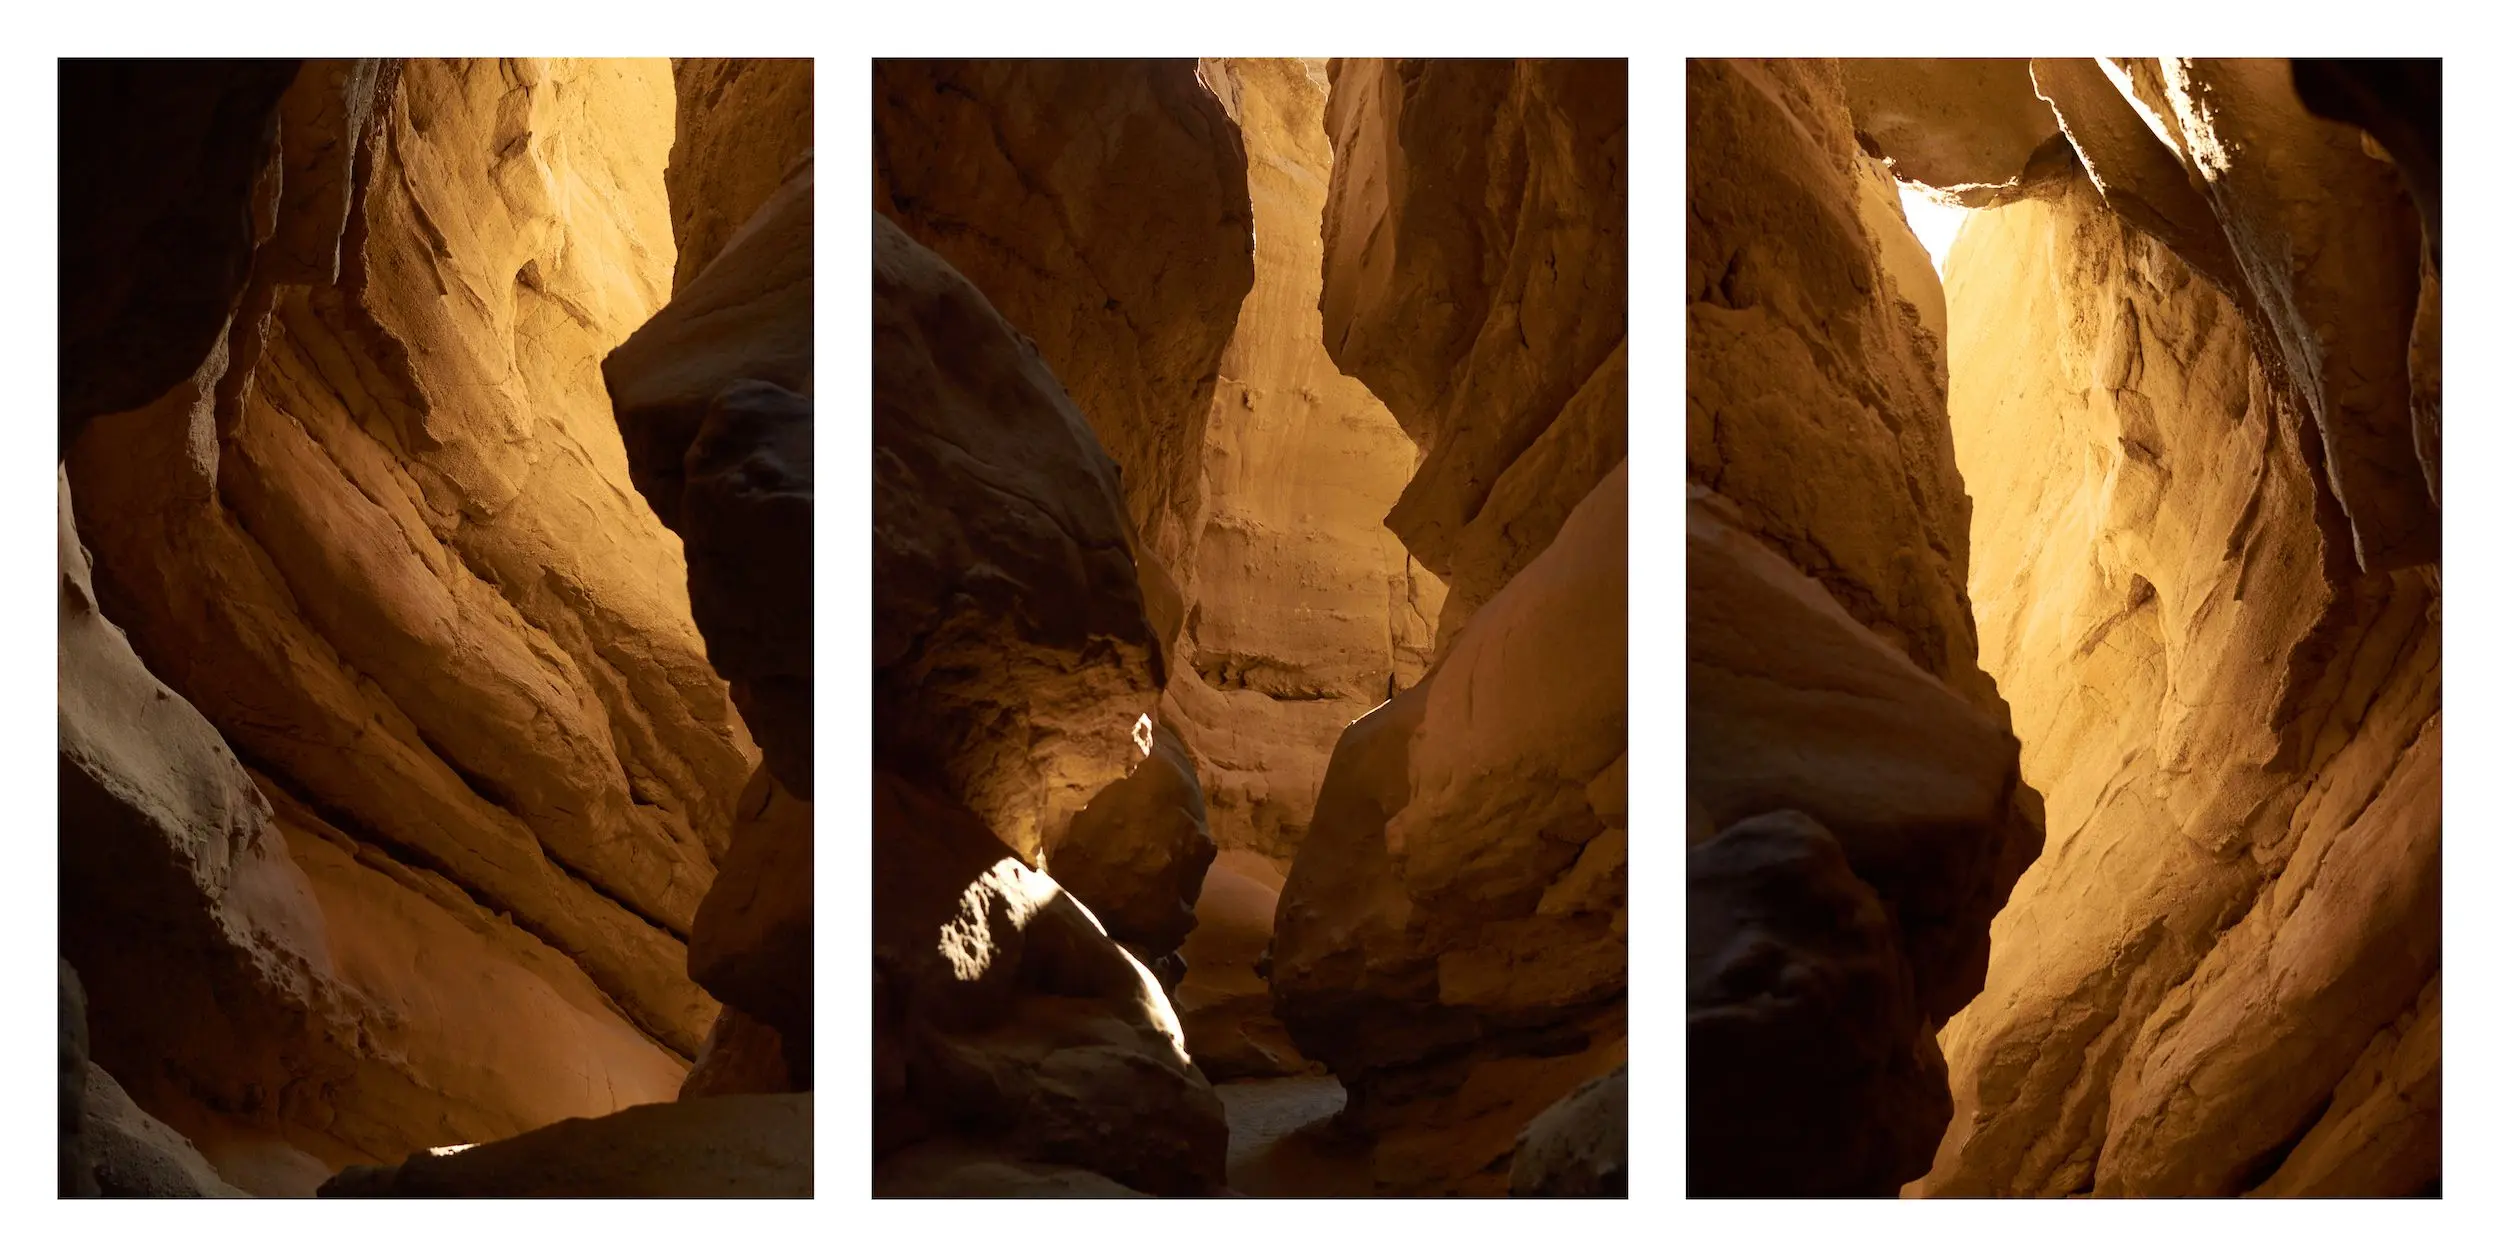 Triptych of photos all containing golden light shining down into a narrow slot canyon in Anza-Borrego Desert State Park.